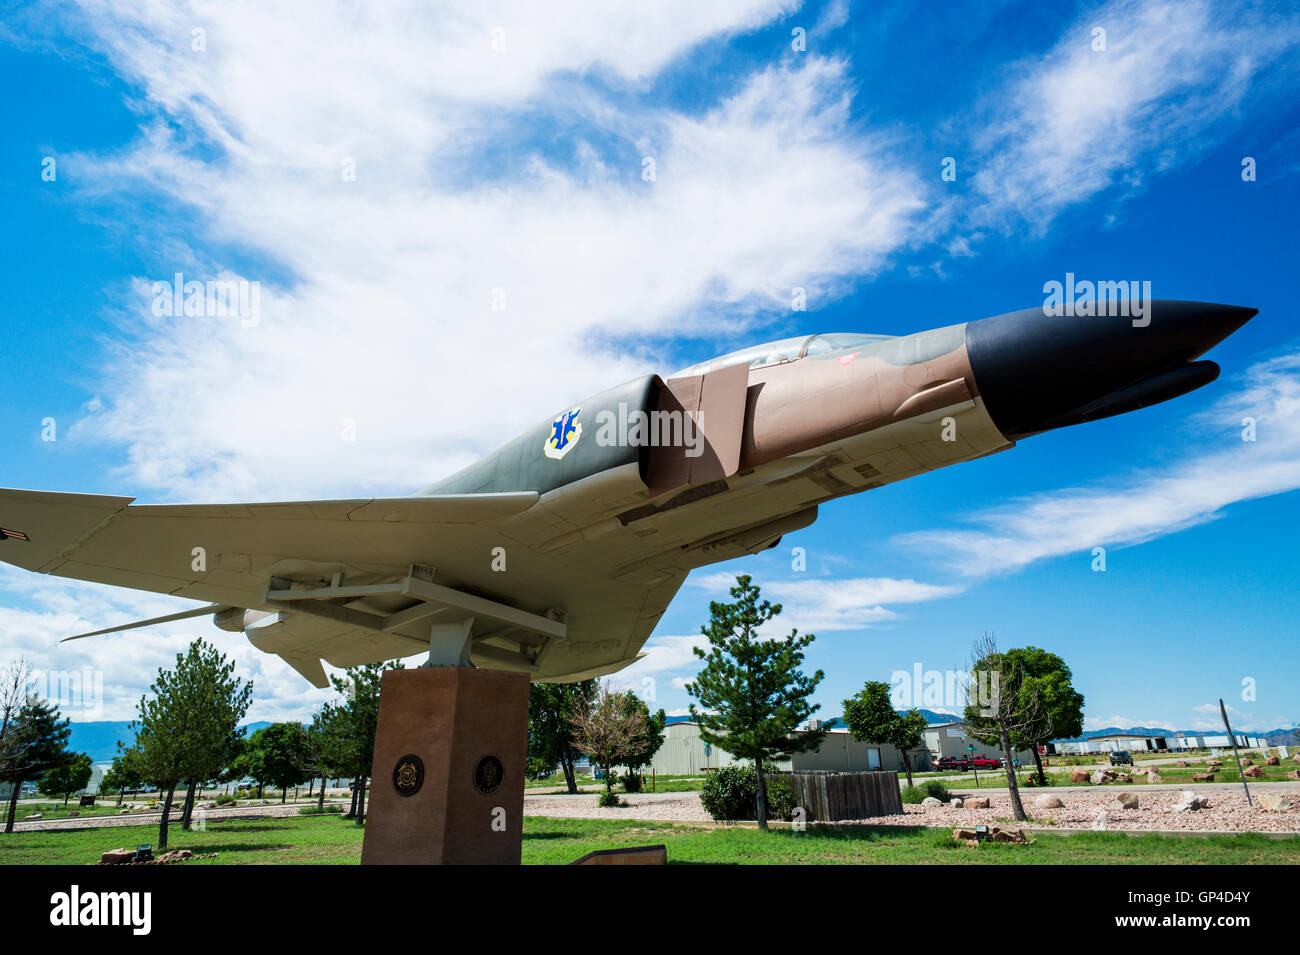 McDonnell Douglas F-4C Phantom II jet fighter interceptor ; US Air Force ; Fremont County Airport ; Penrose, Colorado, USA Banque D'Images